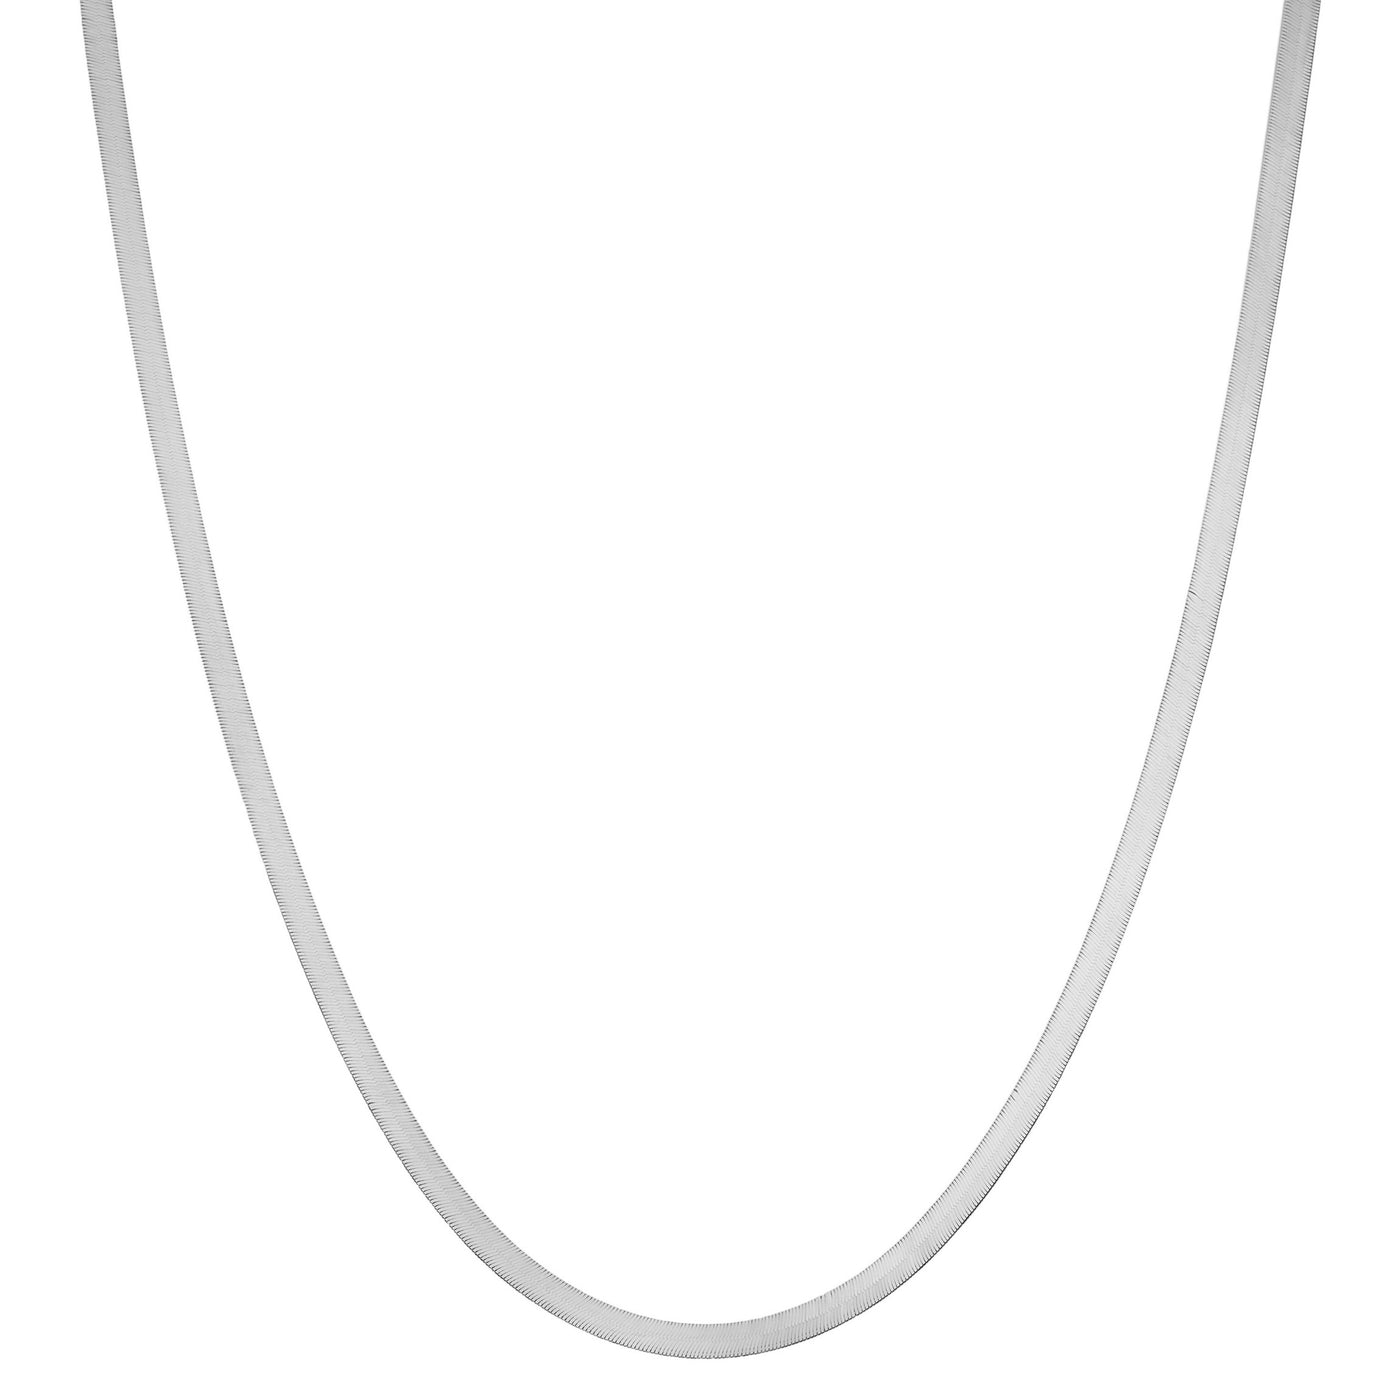 Women's High Polished Herringbone Chain Necklace 14K White Gold